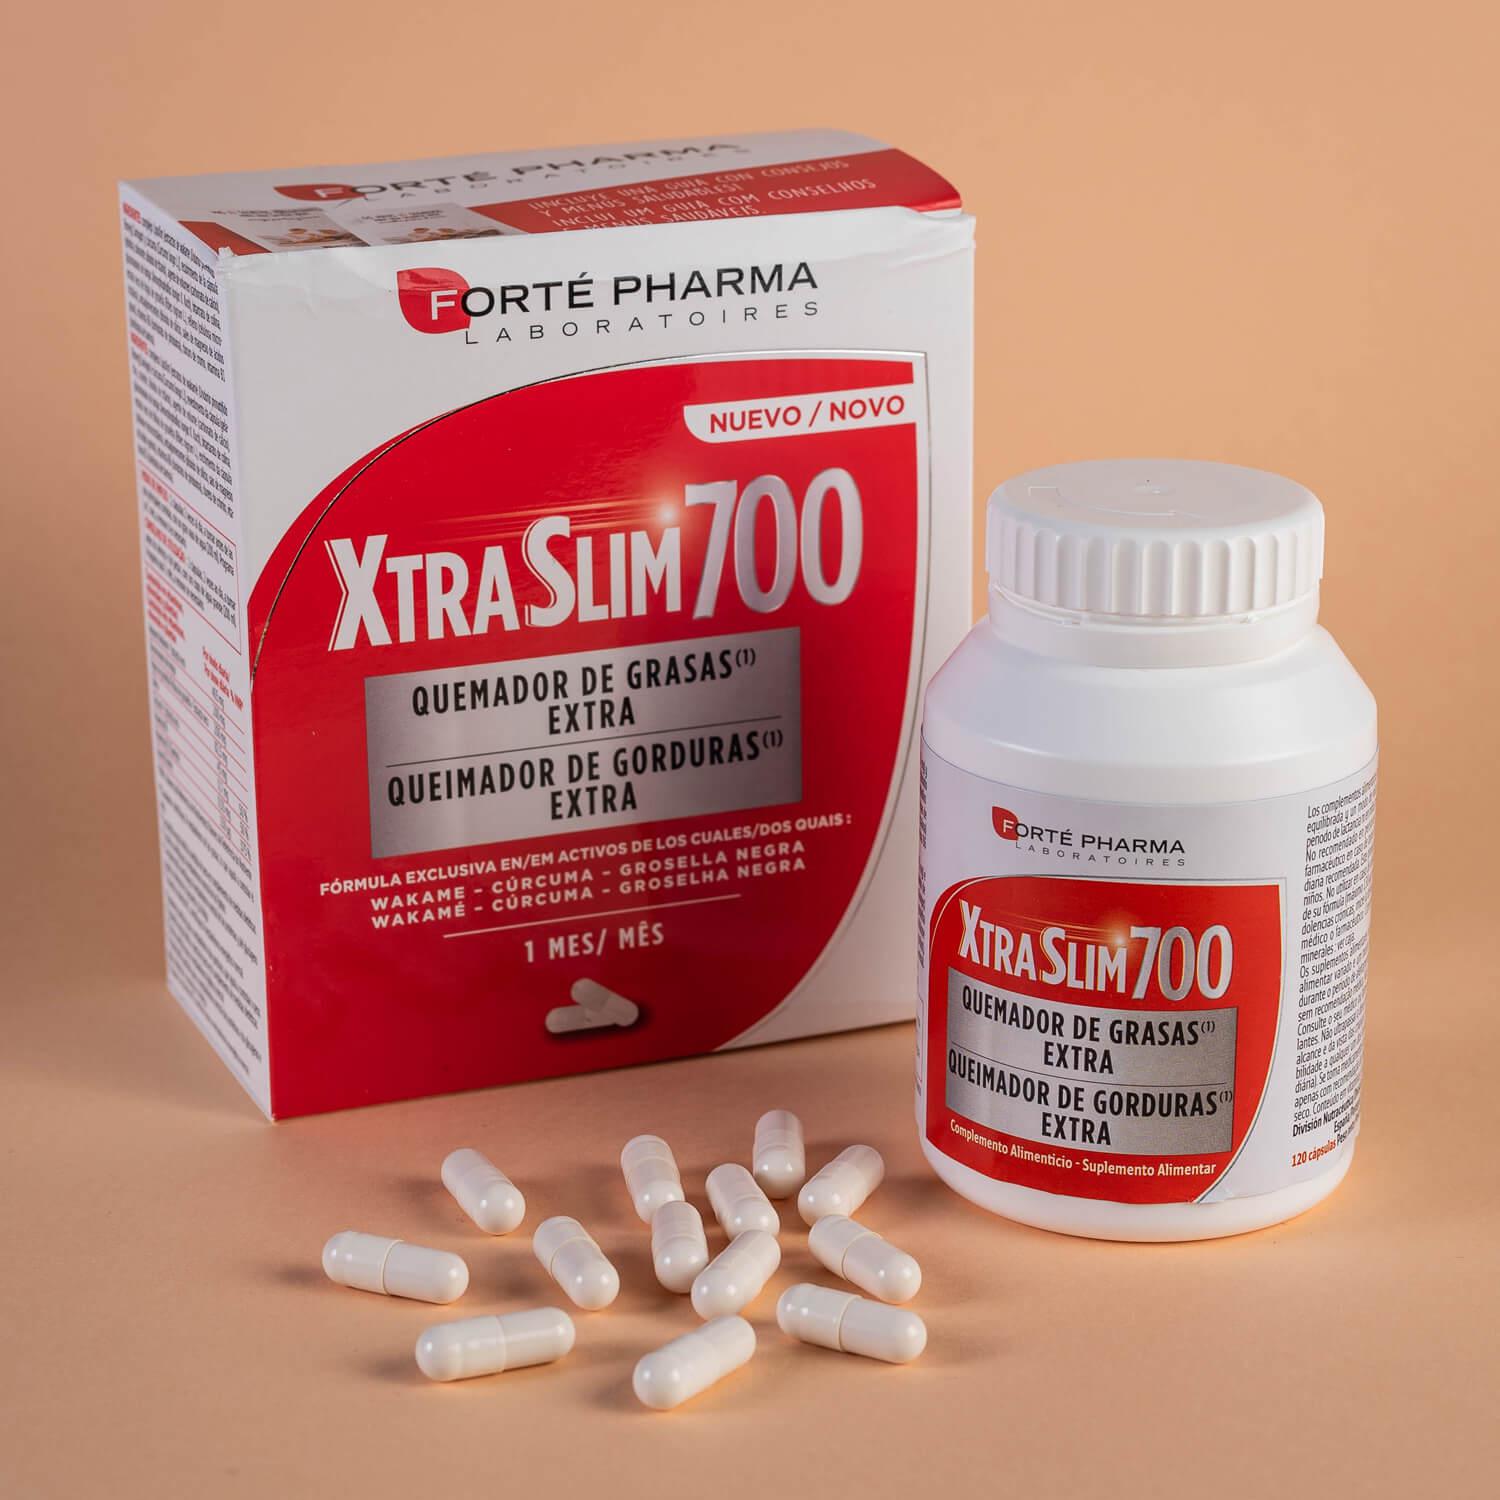 xtraslim 700-Forté Pharma